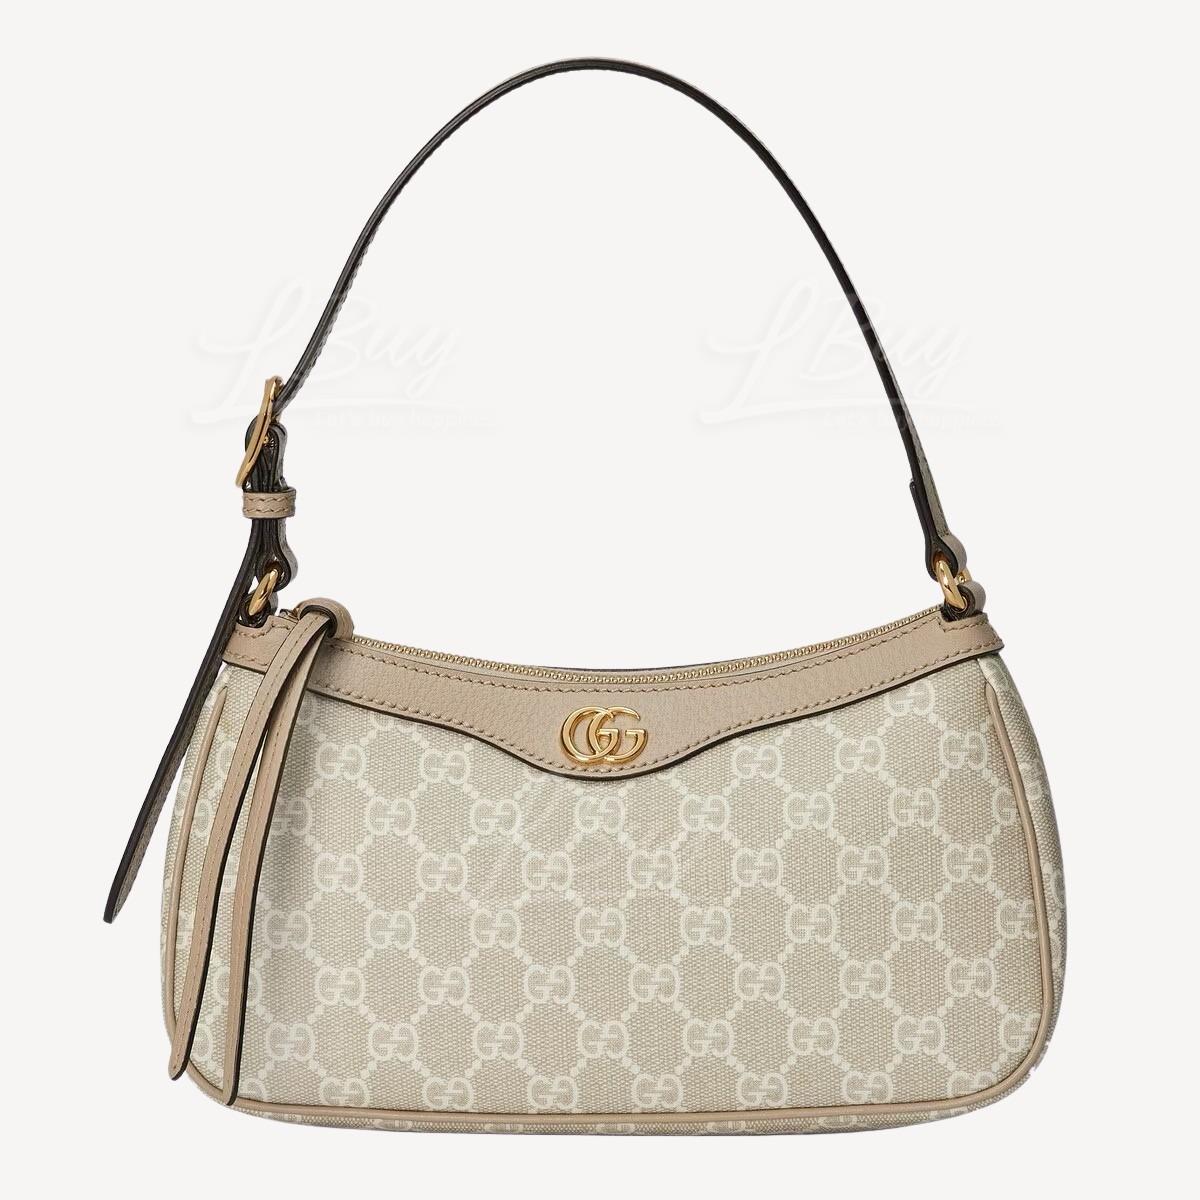 Gucci Ophidia Supreme GG Logo Small Handbag Beige and White 735145